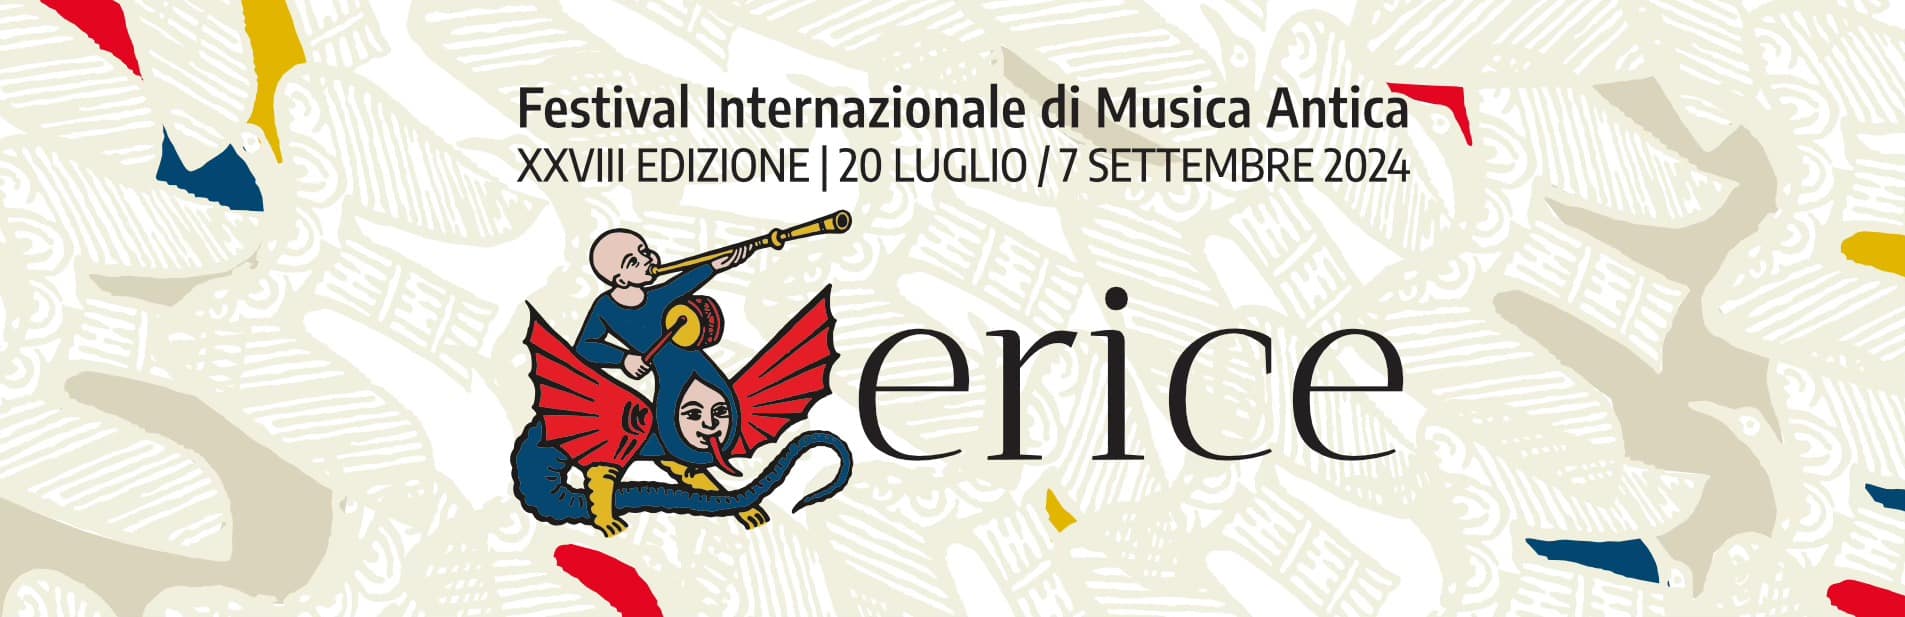 Festival Internazionale di Musica Antica